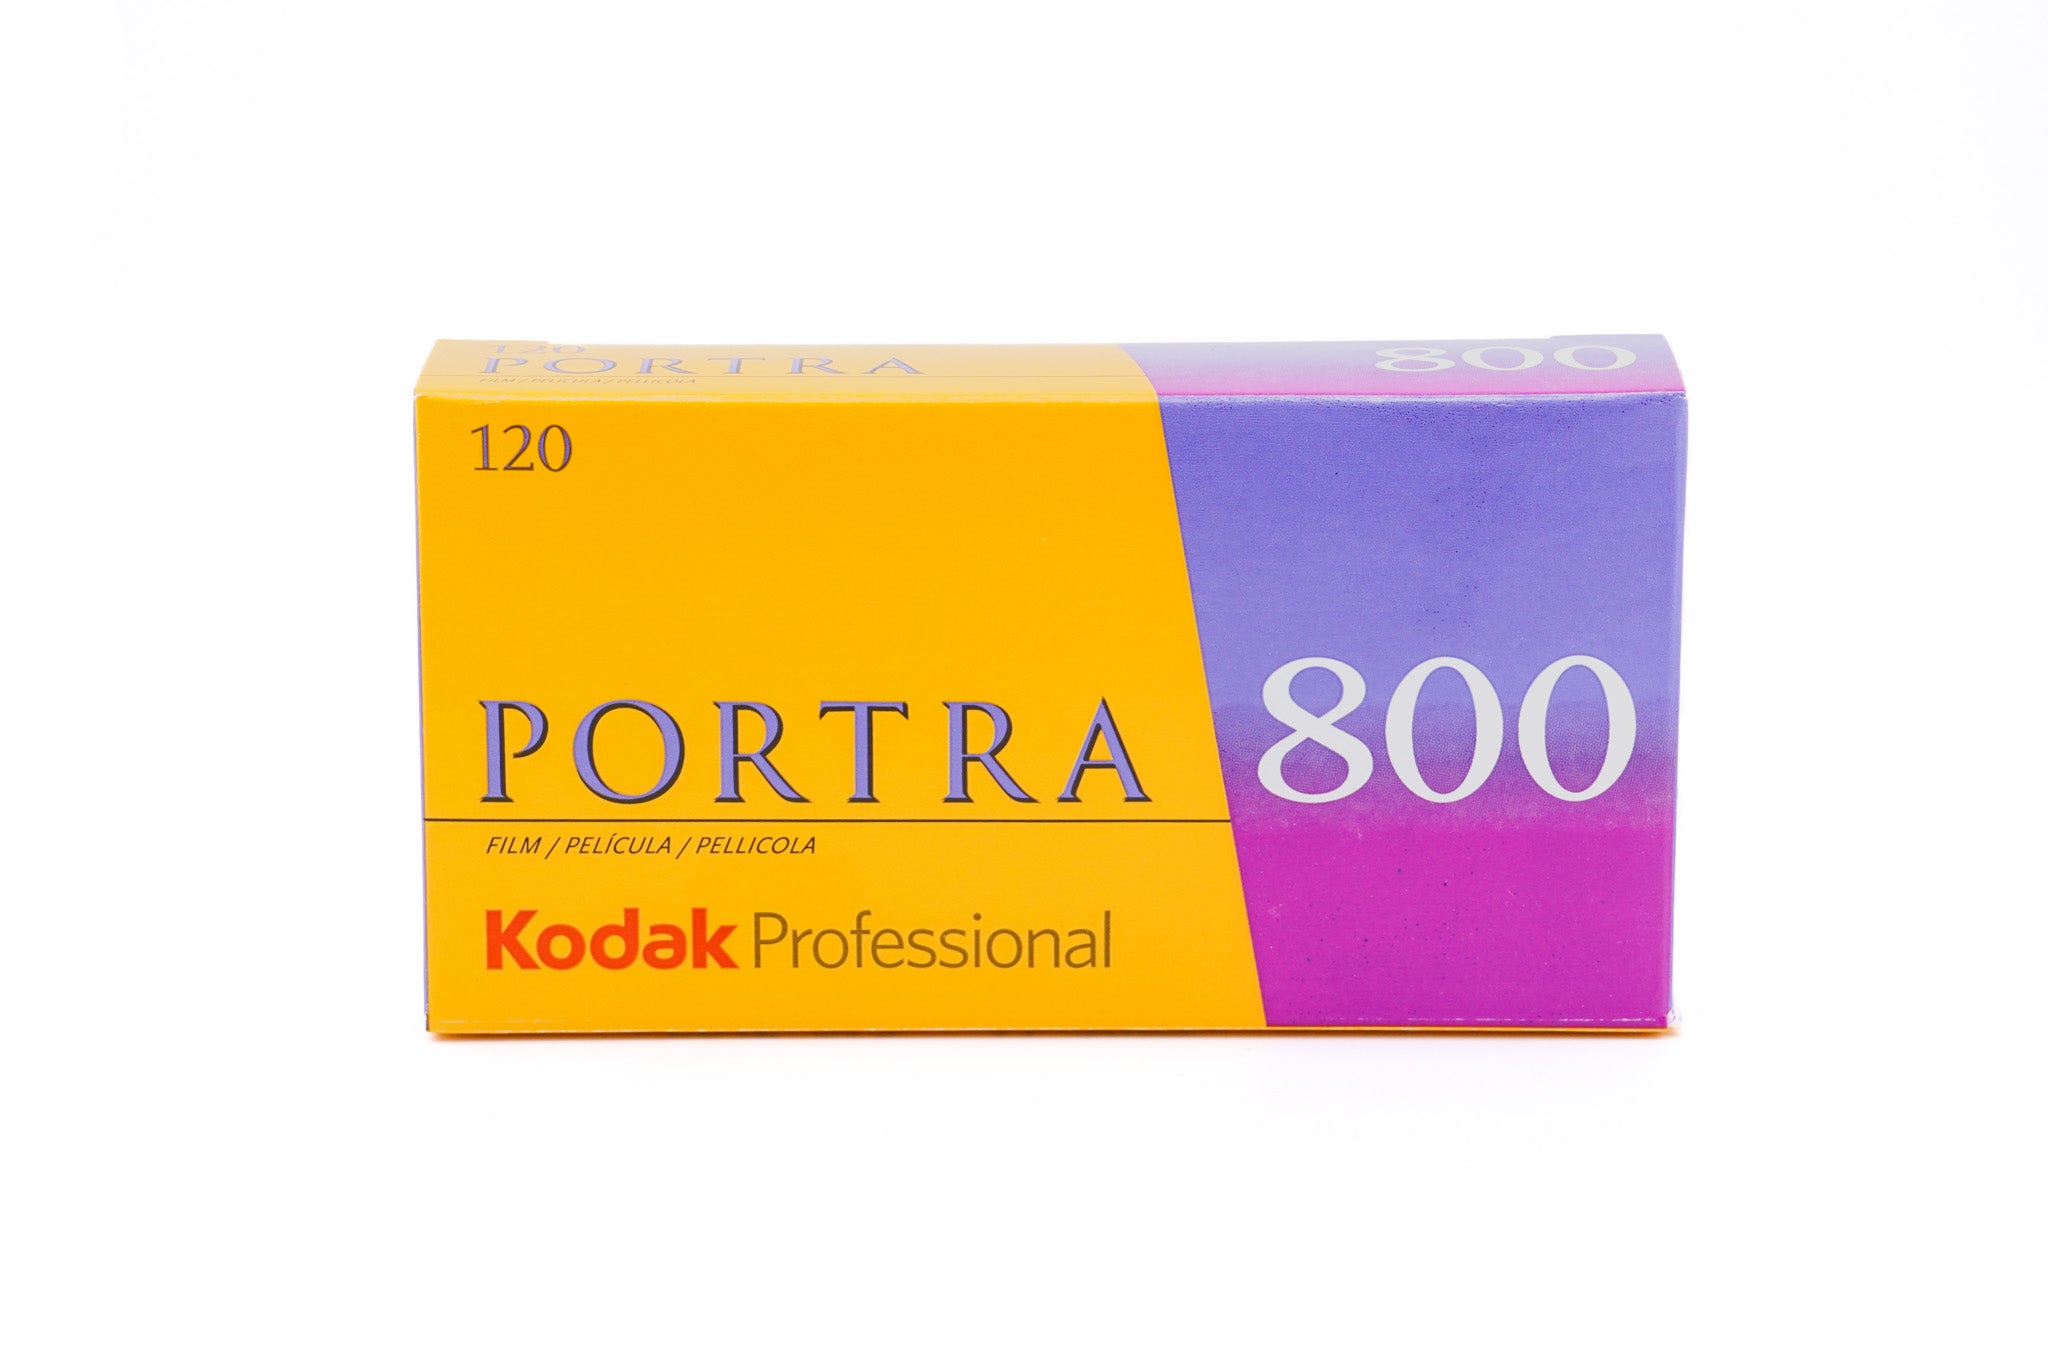 Kodak Portra 800 (120)